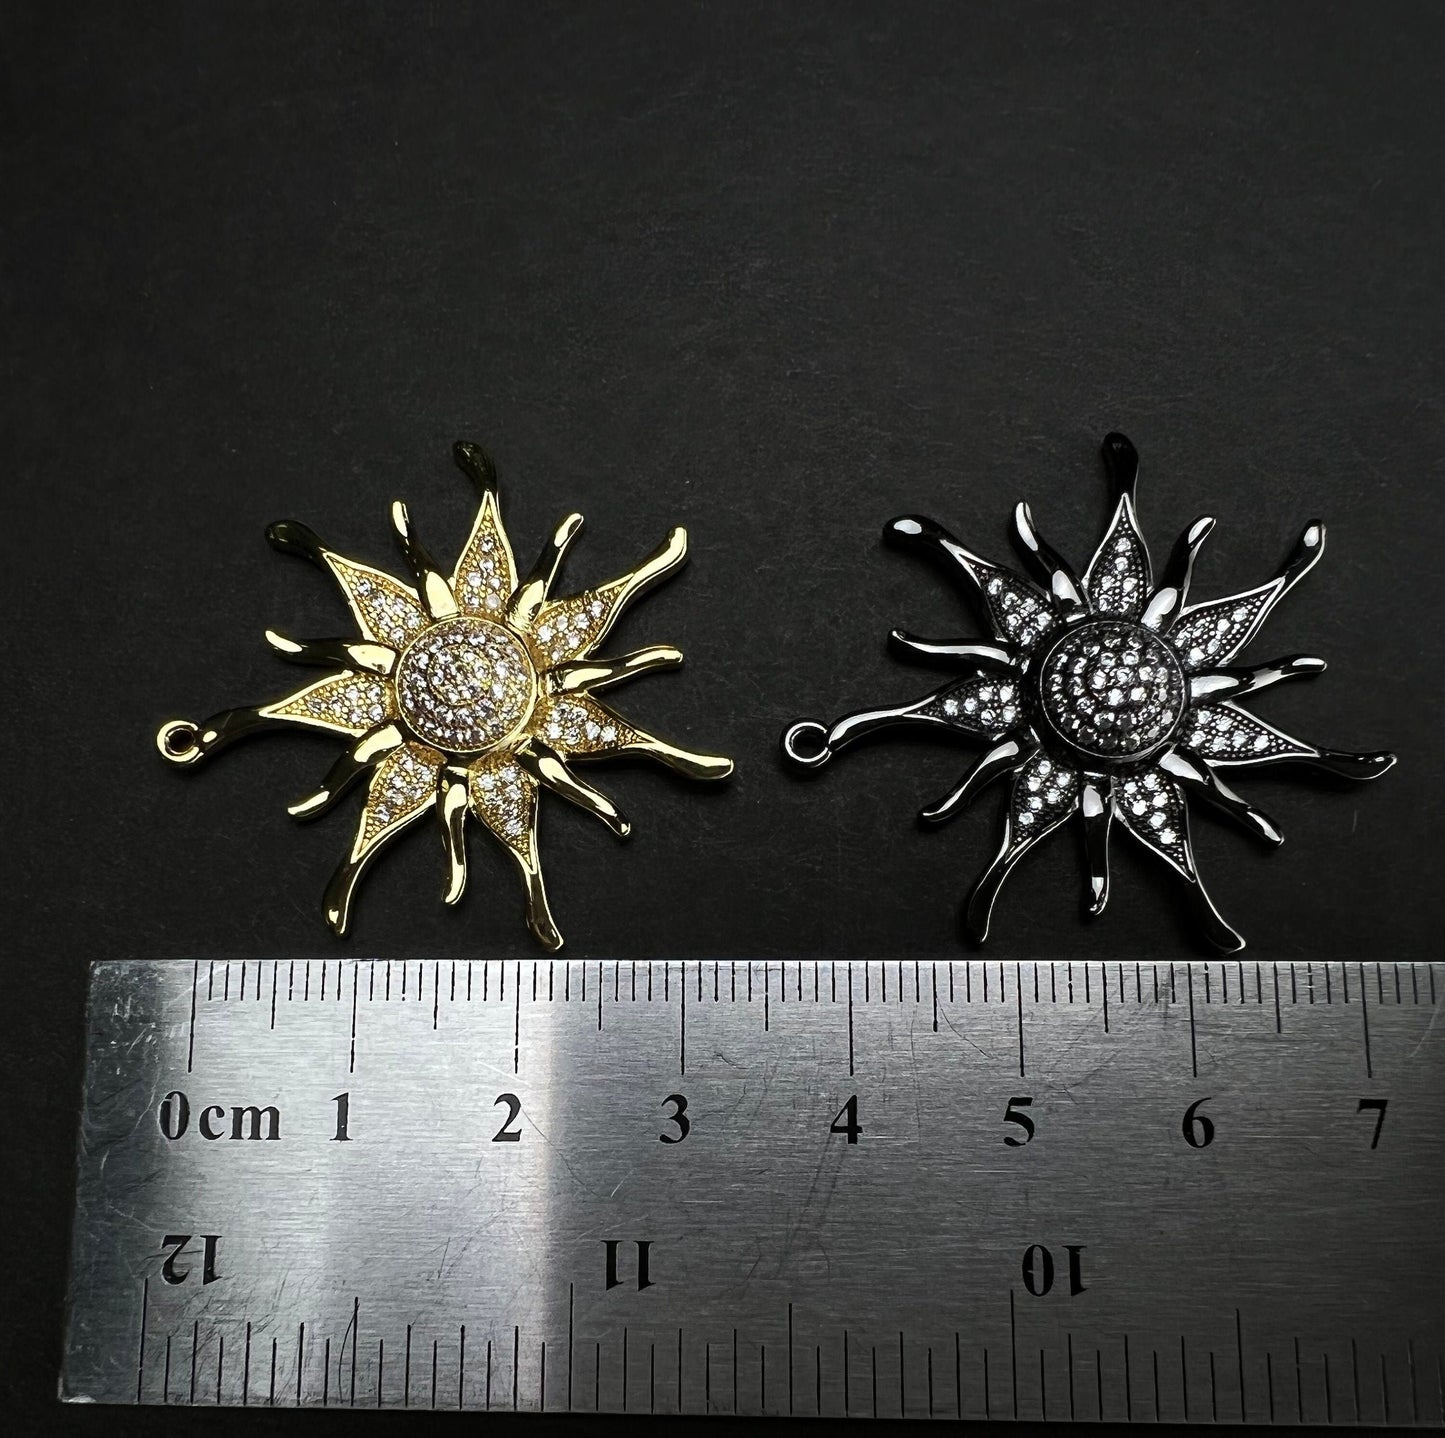 Cubic Zirconia micro pave diamond style Sunflower charm 35mm large pendant Jewelry .